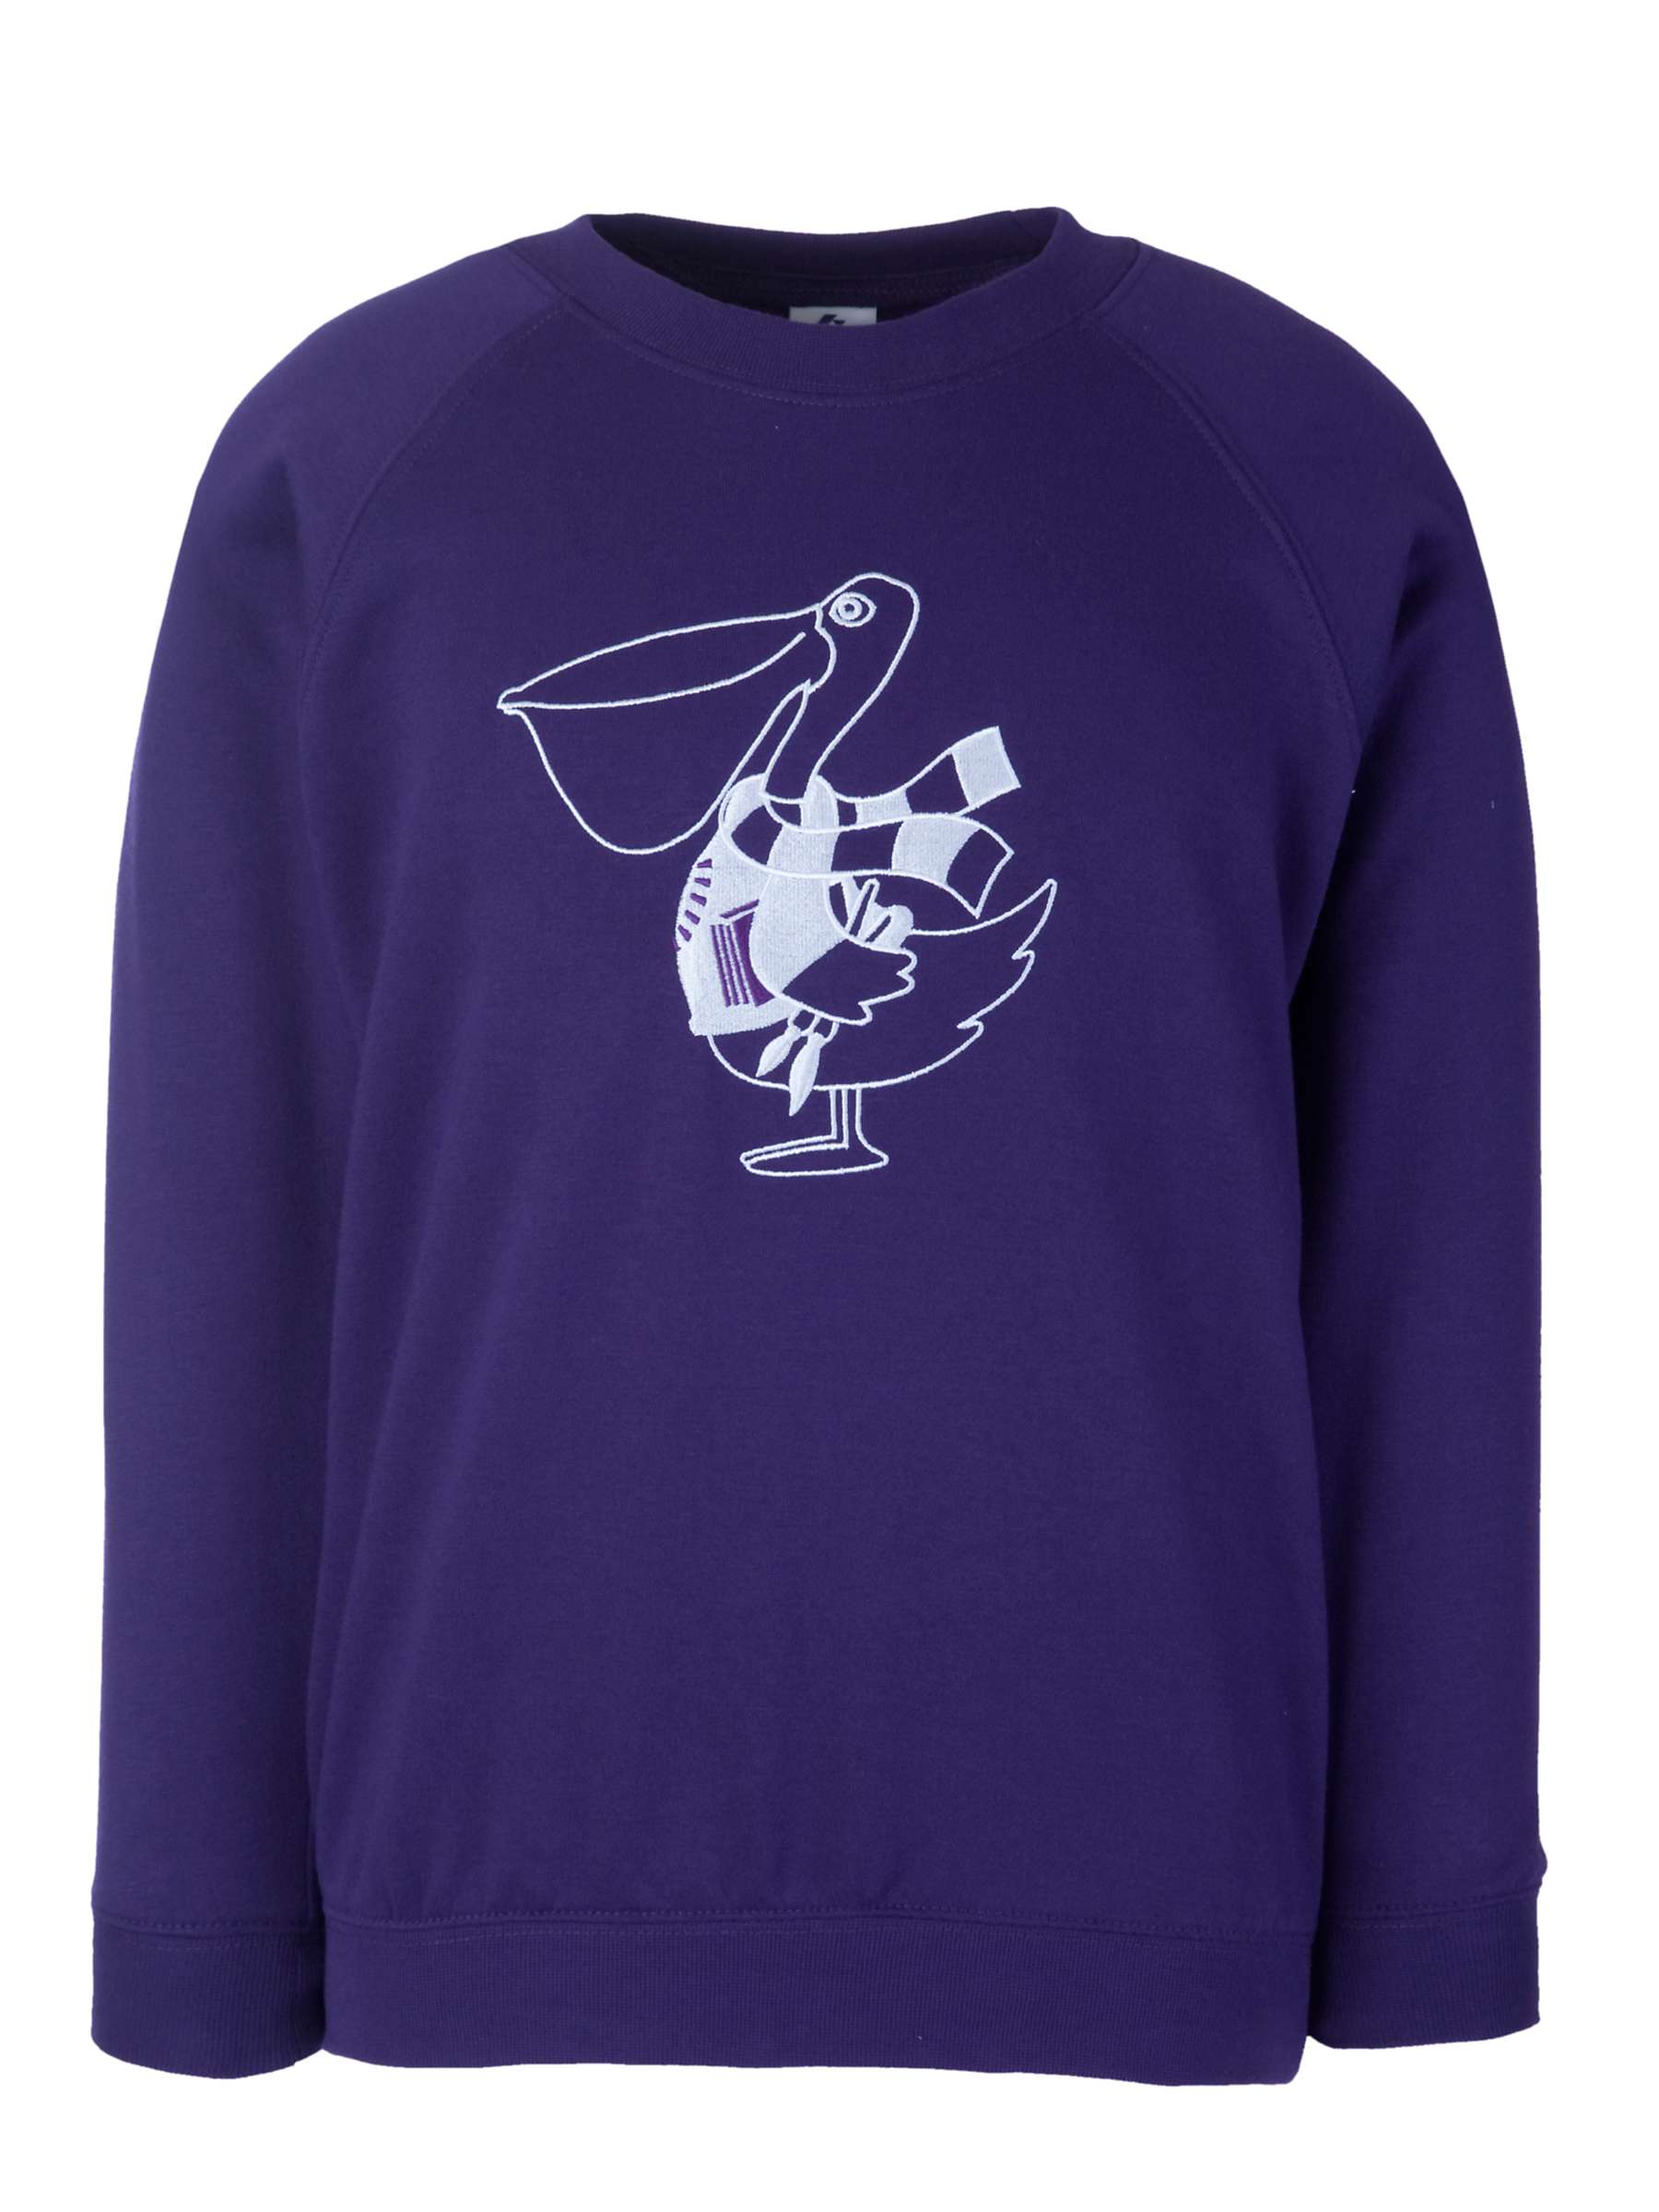 Buy The Perse Pelican Sweatshirt, Purple Online at johnlewis.com